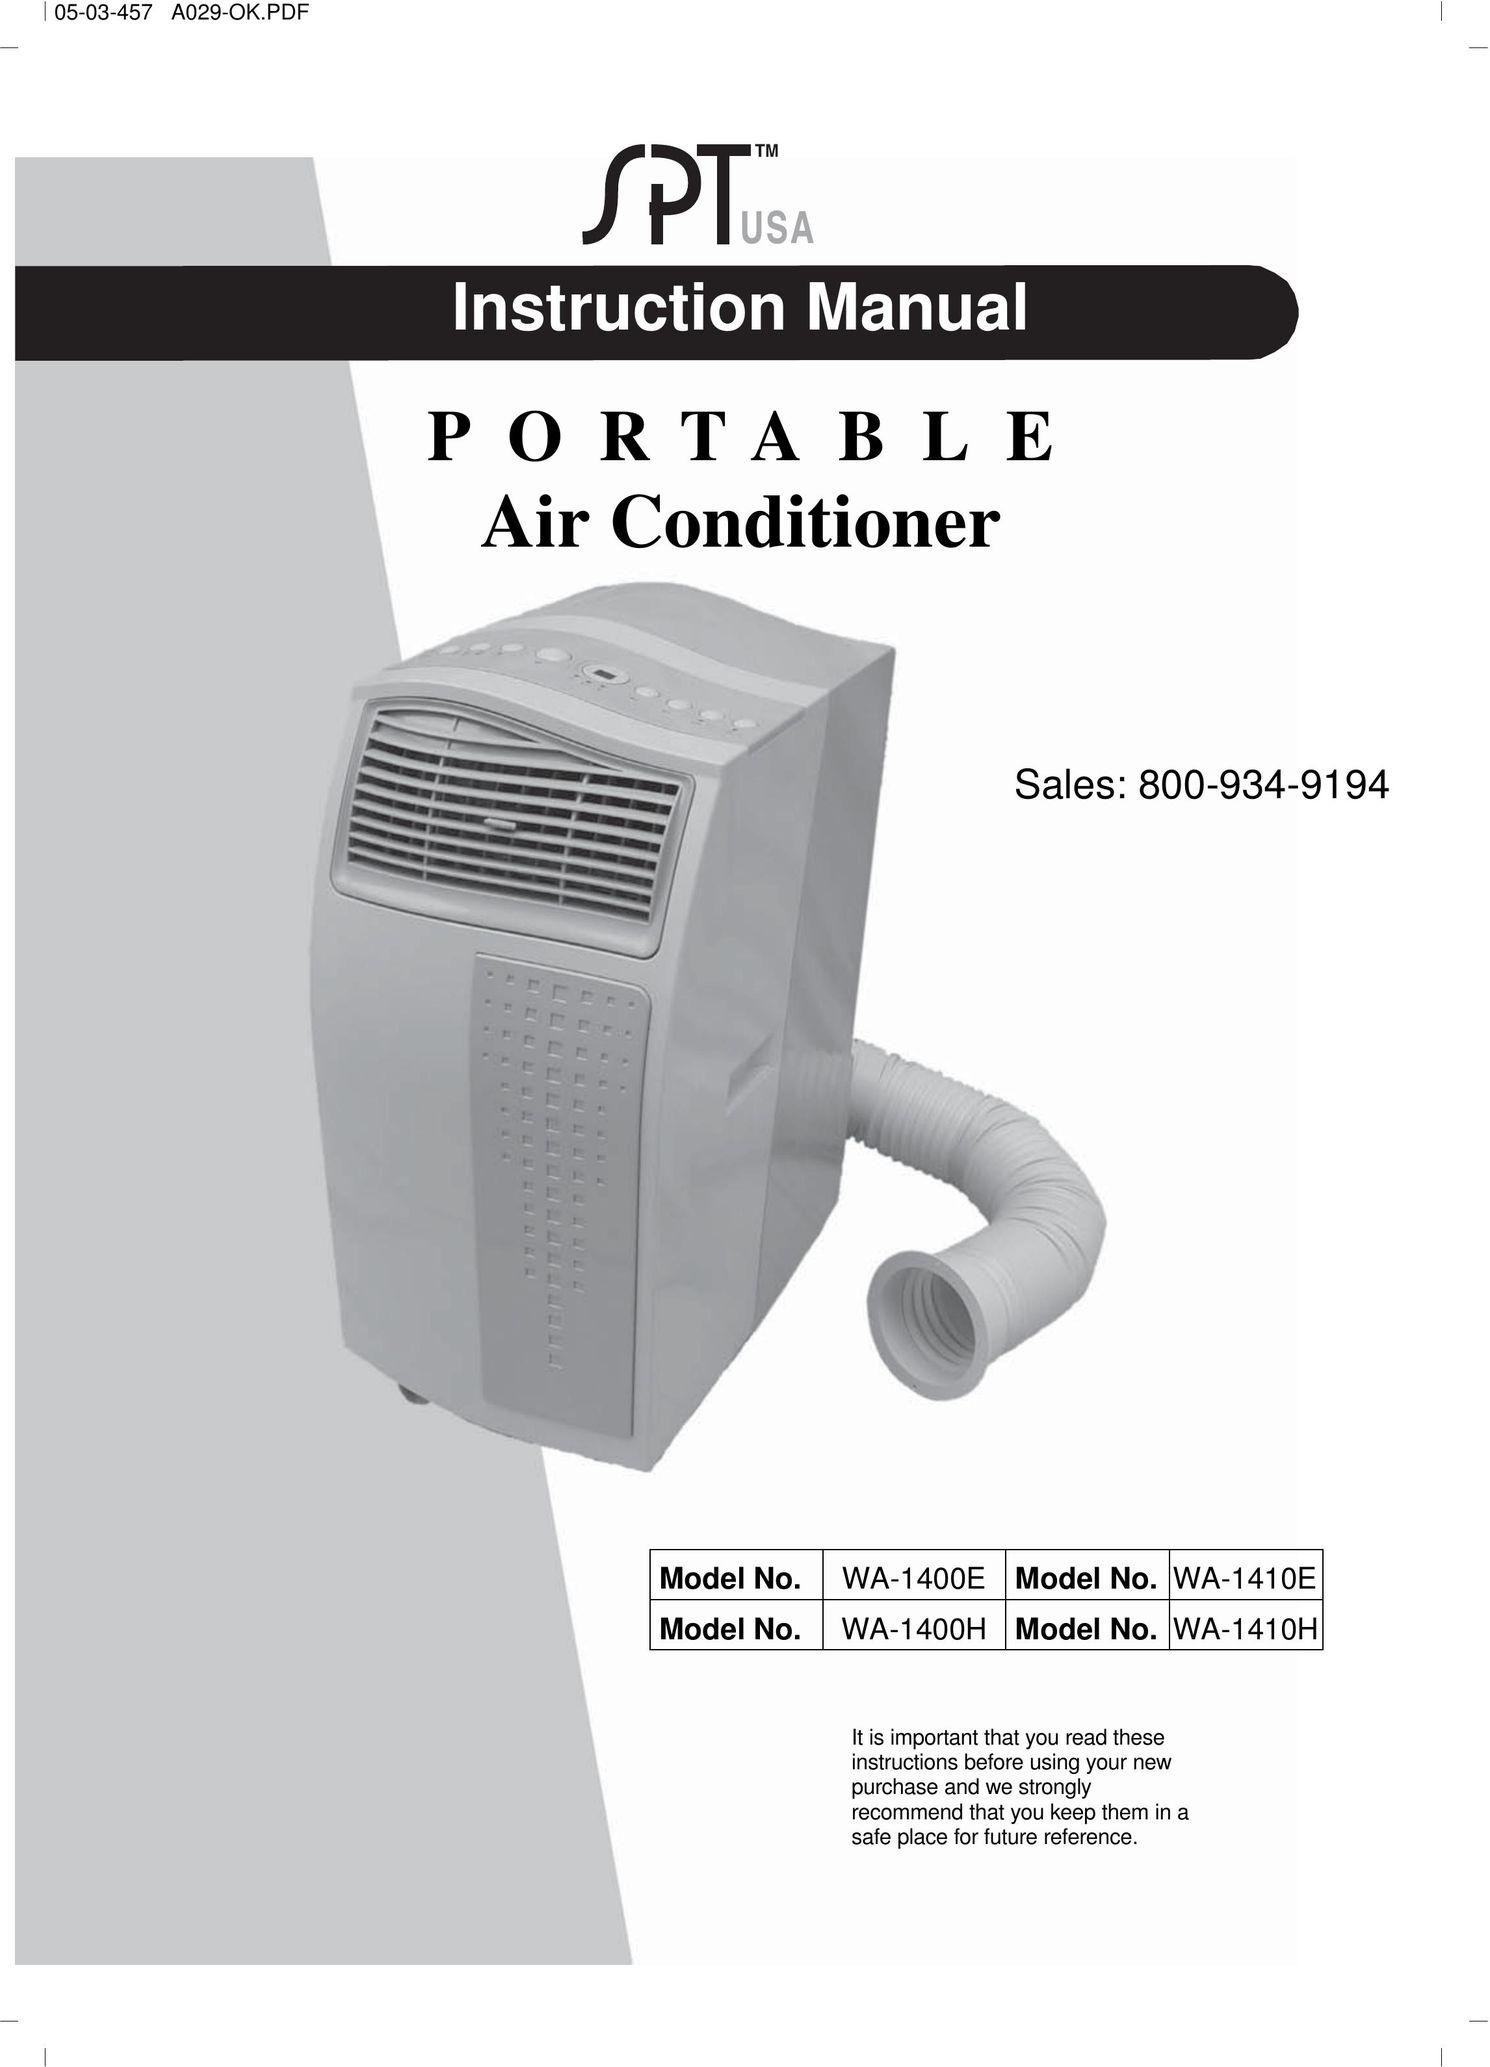 Sunpentown Intl WA-1400H Air Conditioner User Manual